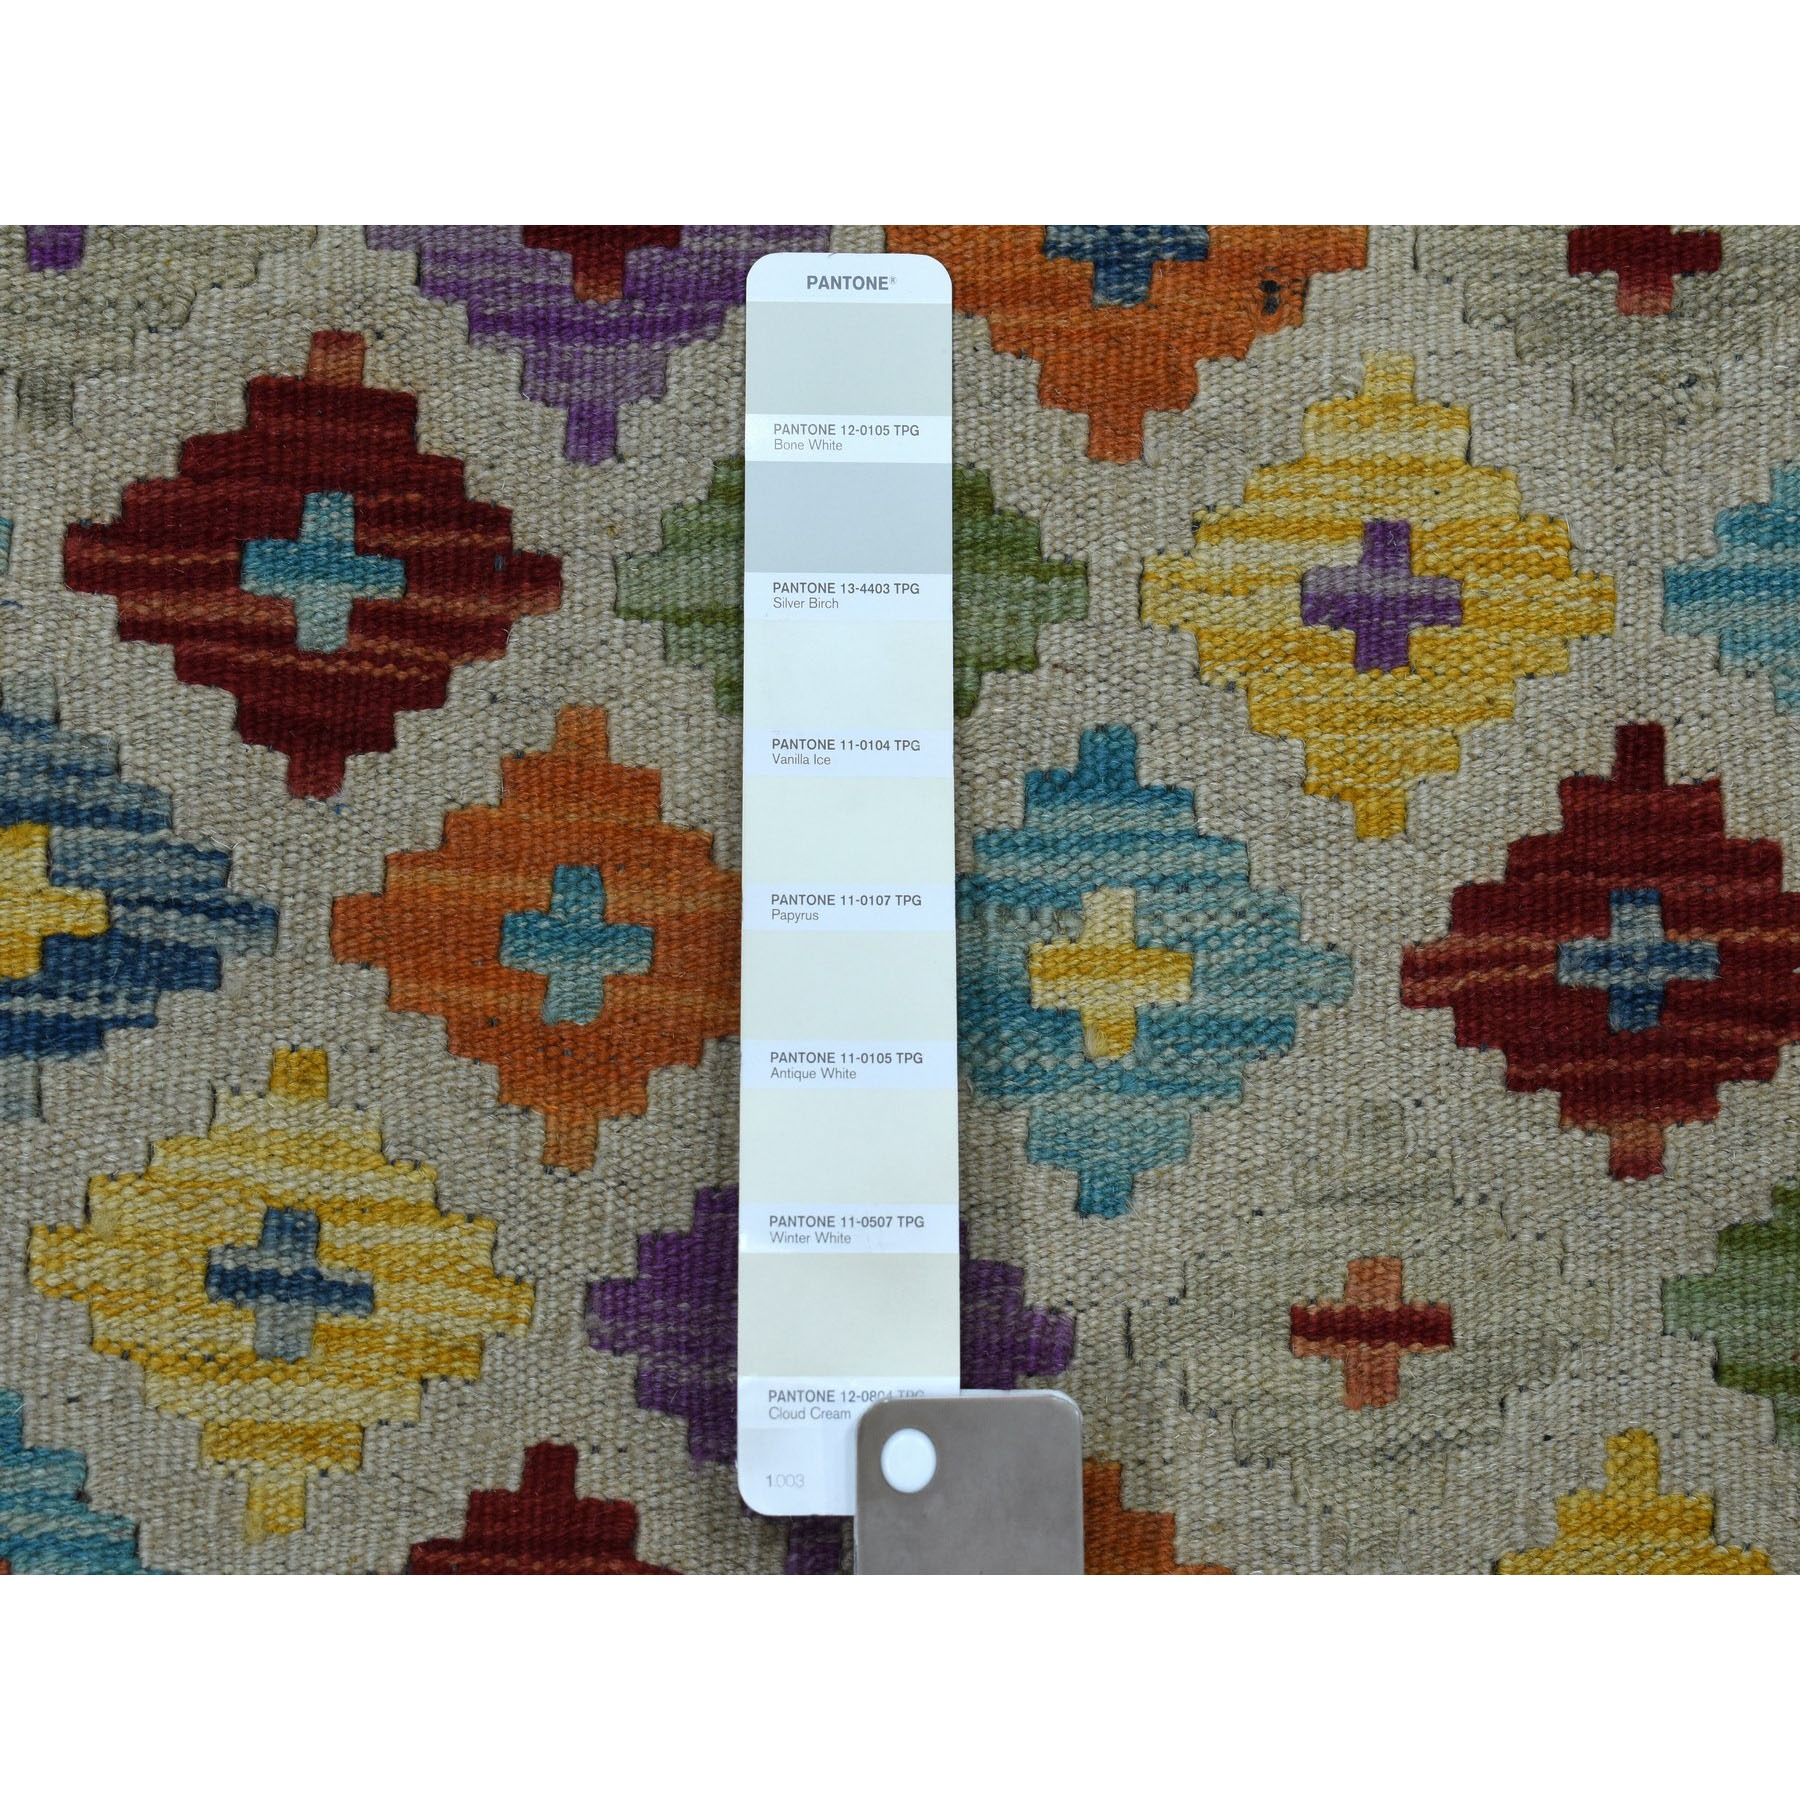 9-10 x13- Veggie Dyes Afghan Killim Pure Wool Hand Woven Oriental Rug 